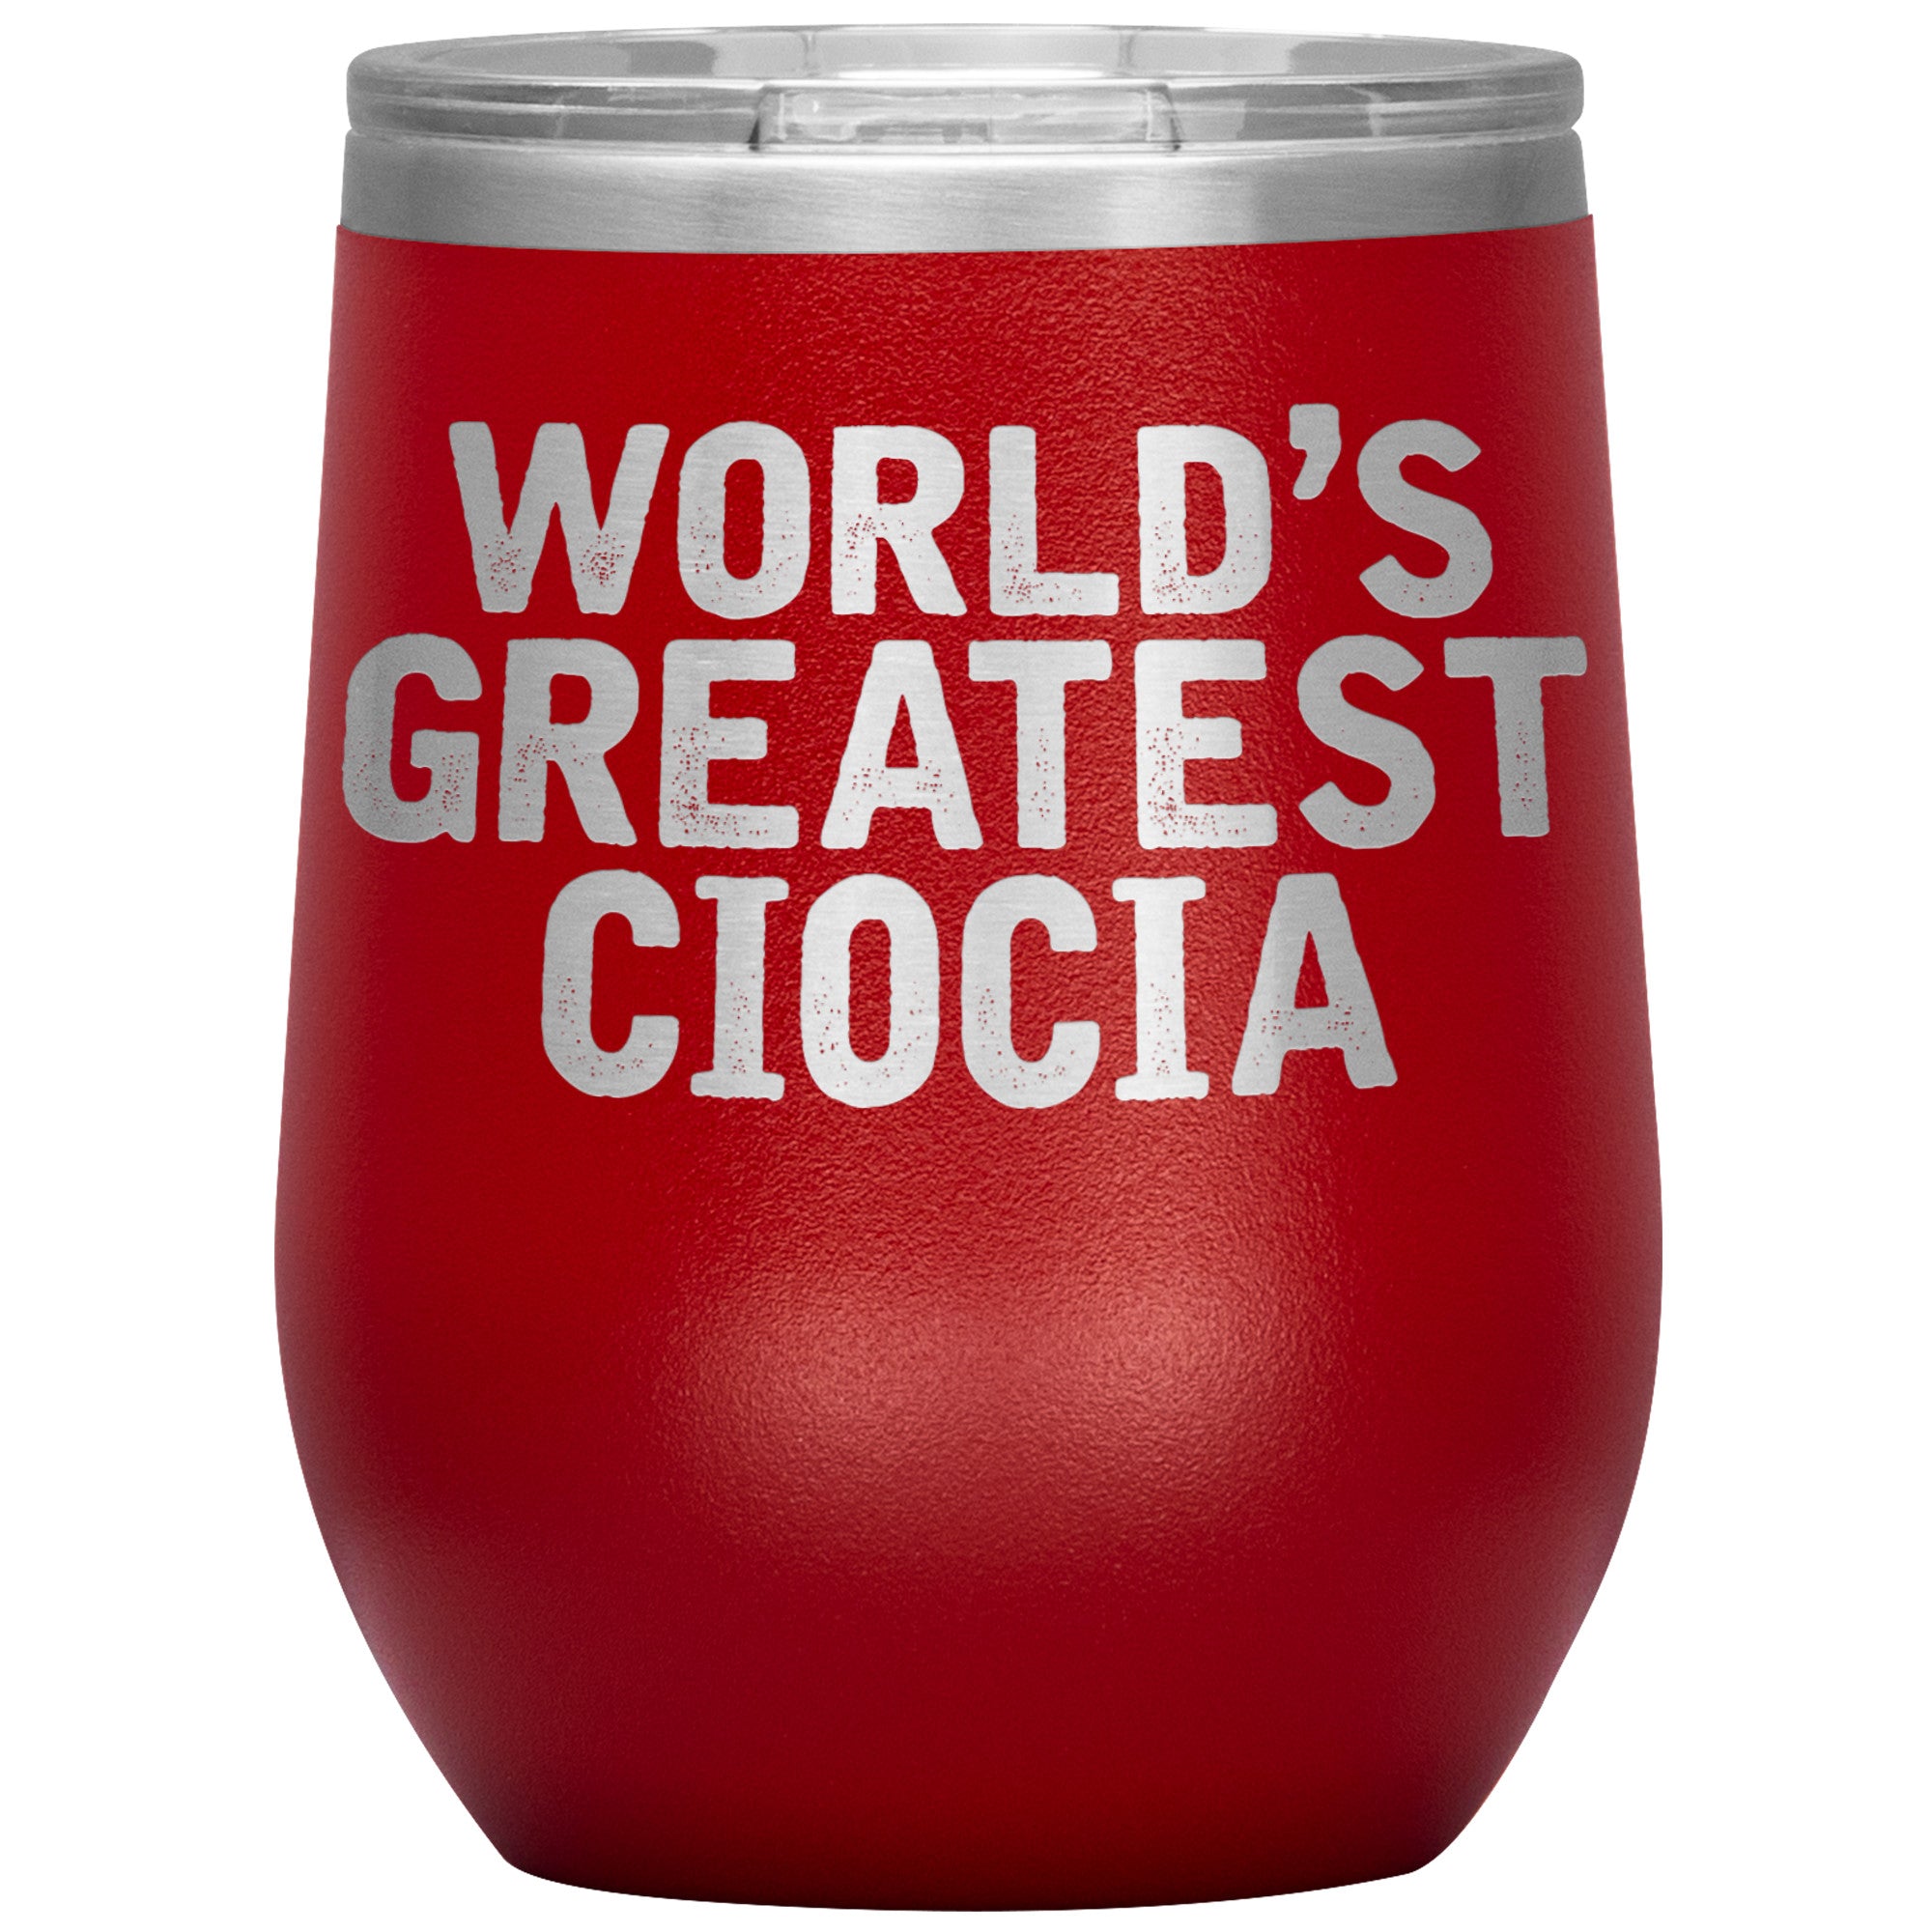 World's Greatest Ciocia Insulated Wine Tumbler Tumblers teelaunch Red  